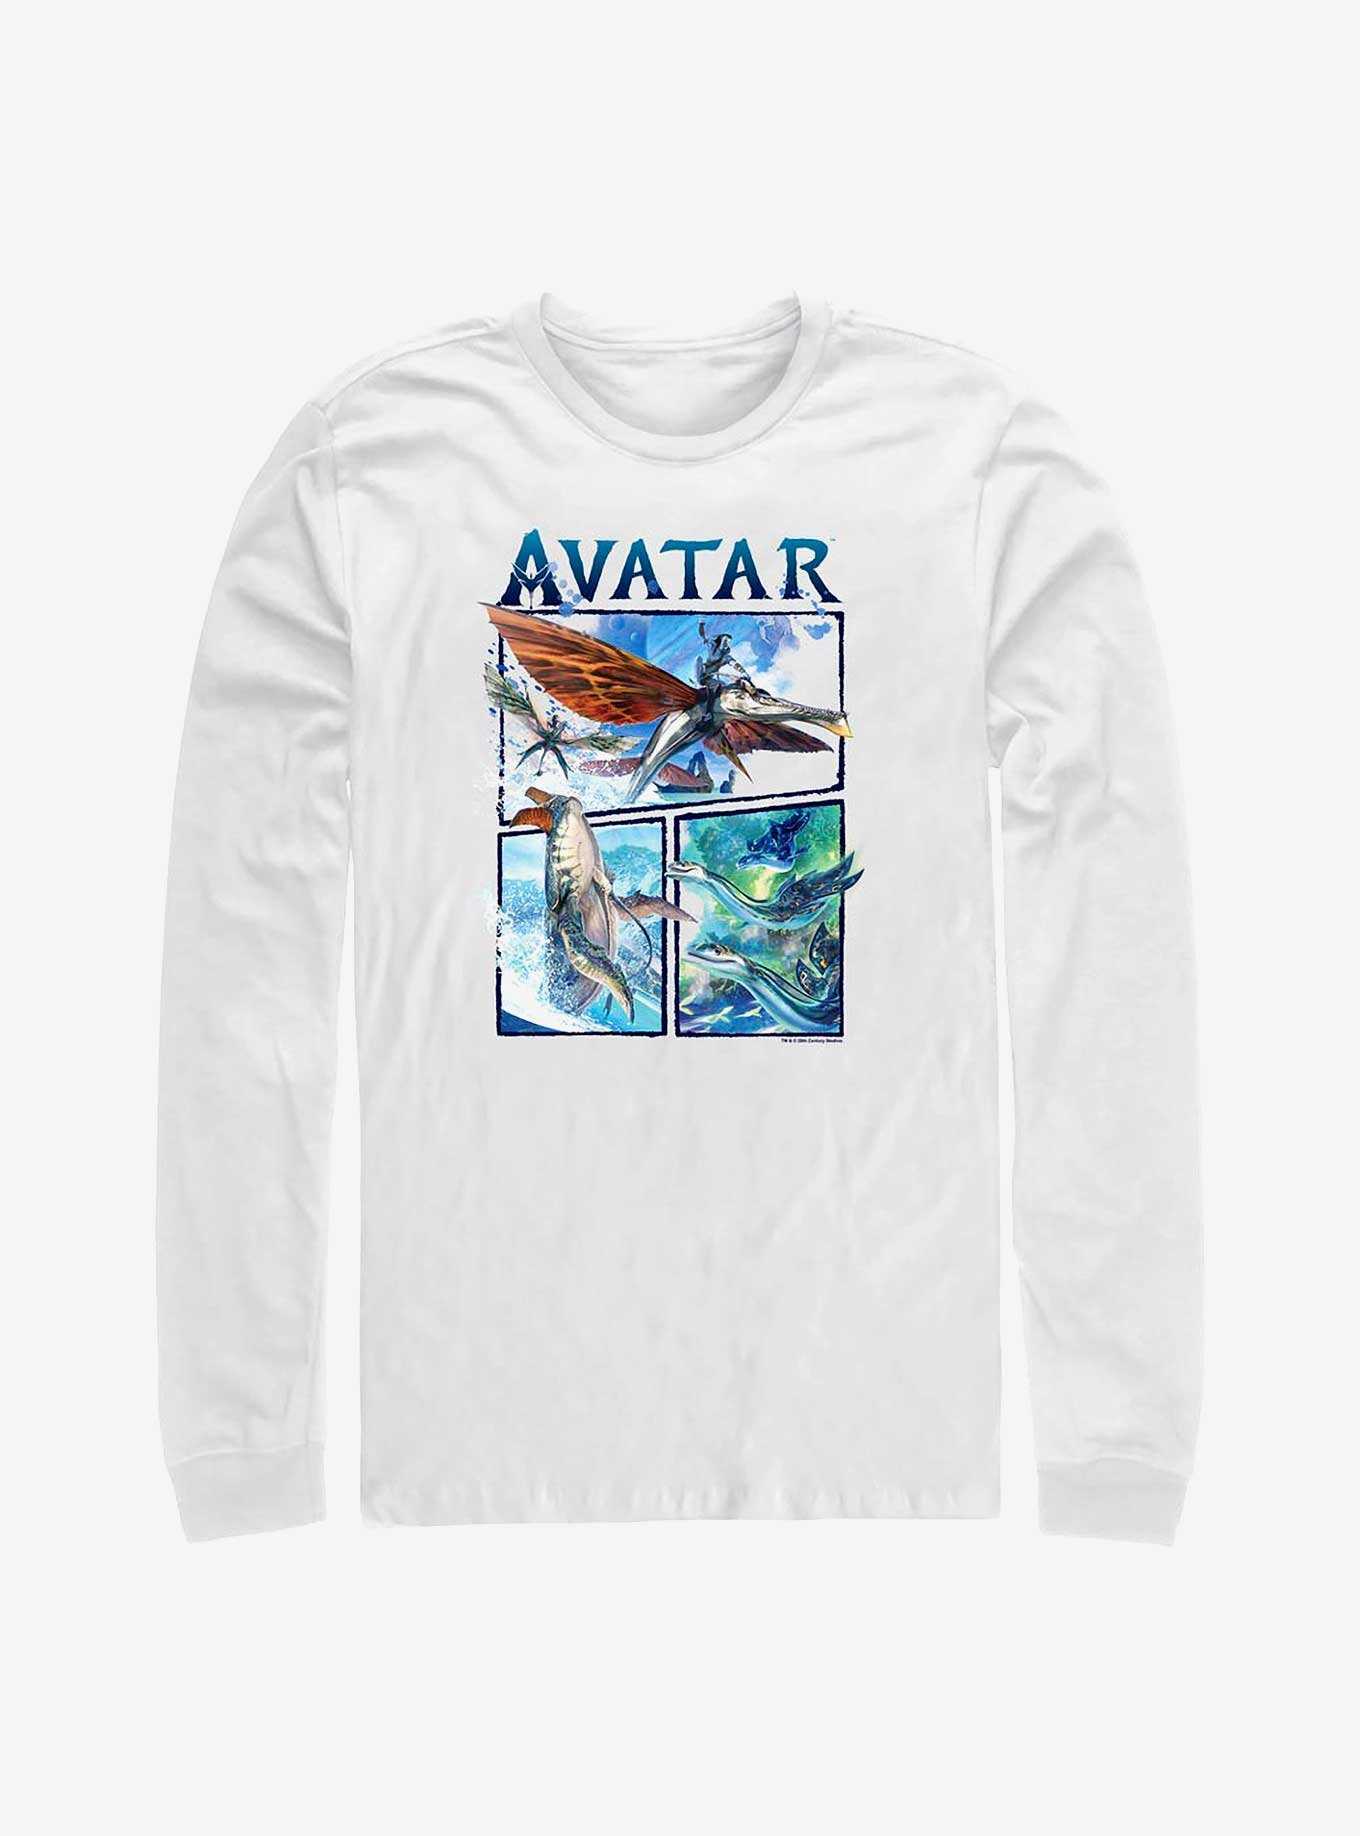 Avatar: The Way of Water Air and Sea Long-Sleeve T-Shirt, , hi-res